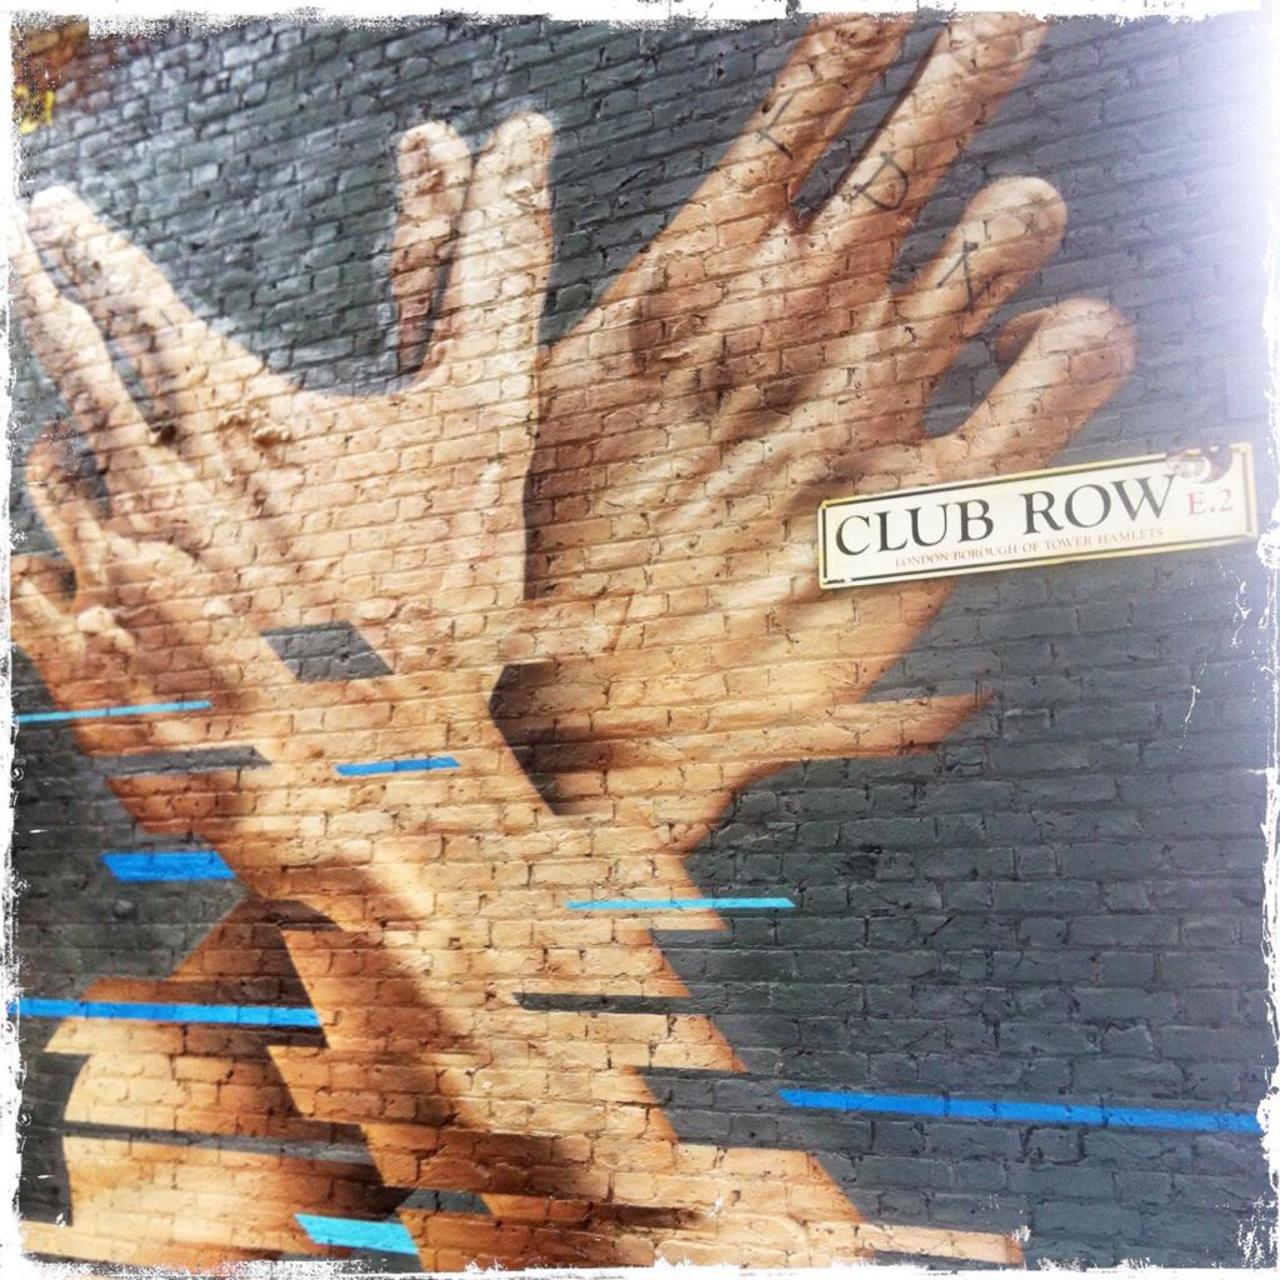 New mural by James Bullough on Club Row, Shoreditch #art #streetart #graffiti http://t.co/z527LkVqZq